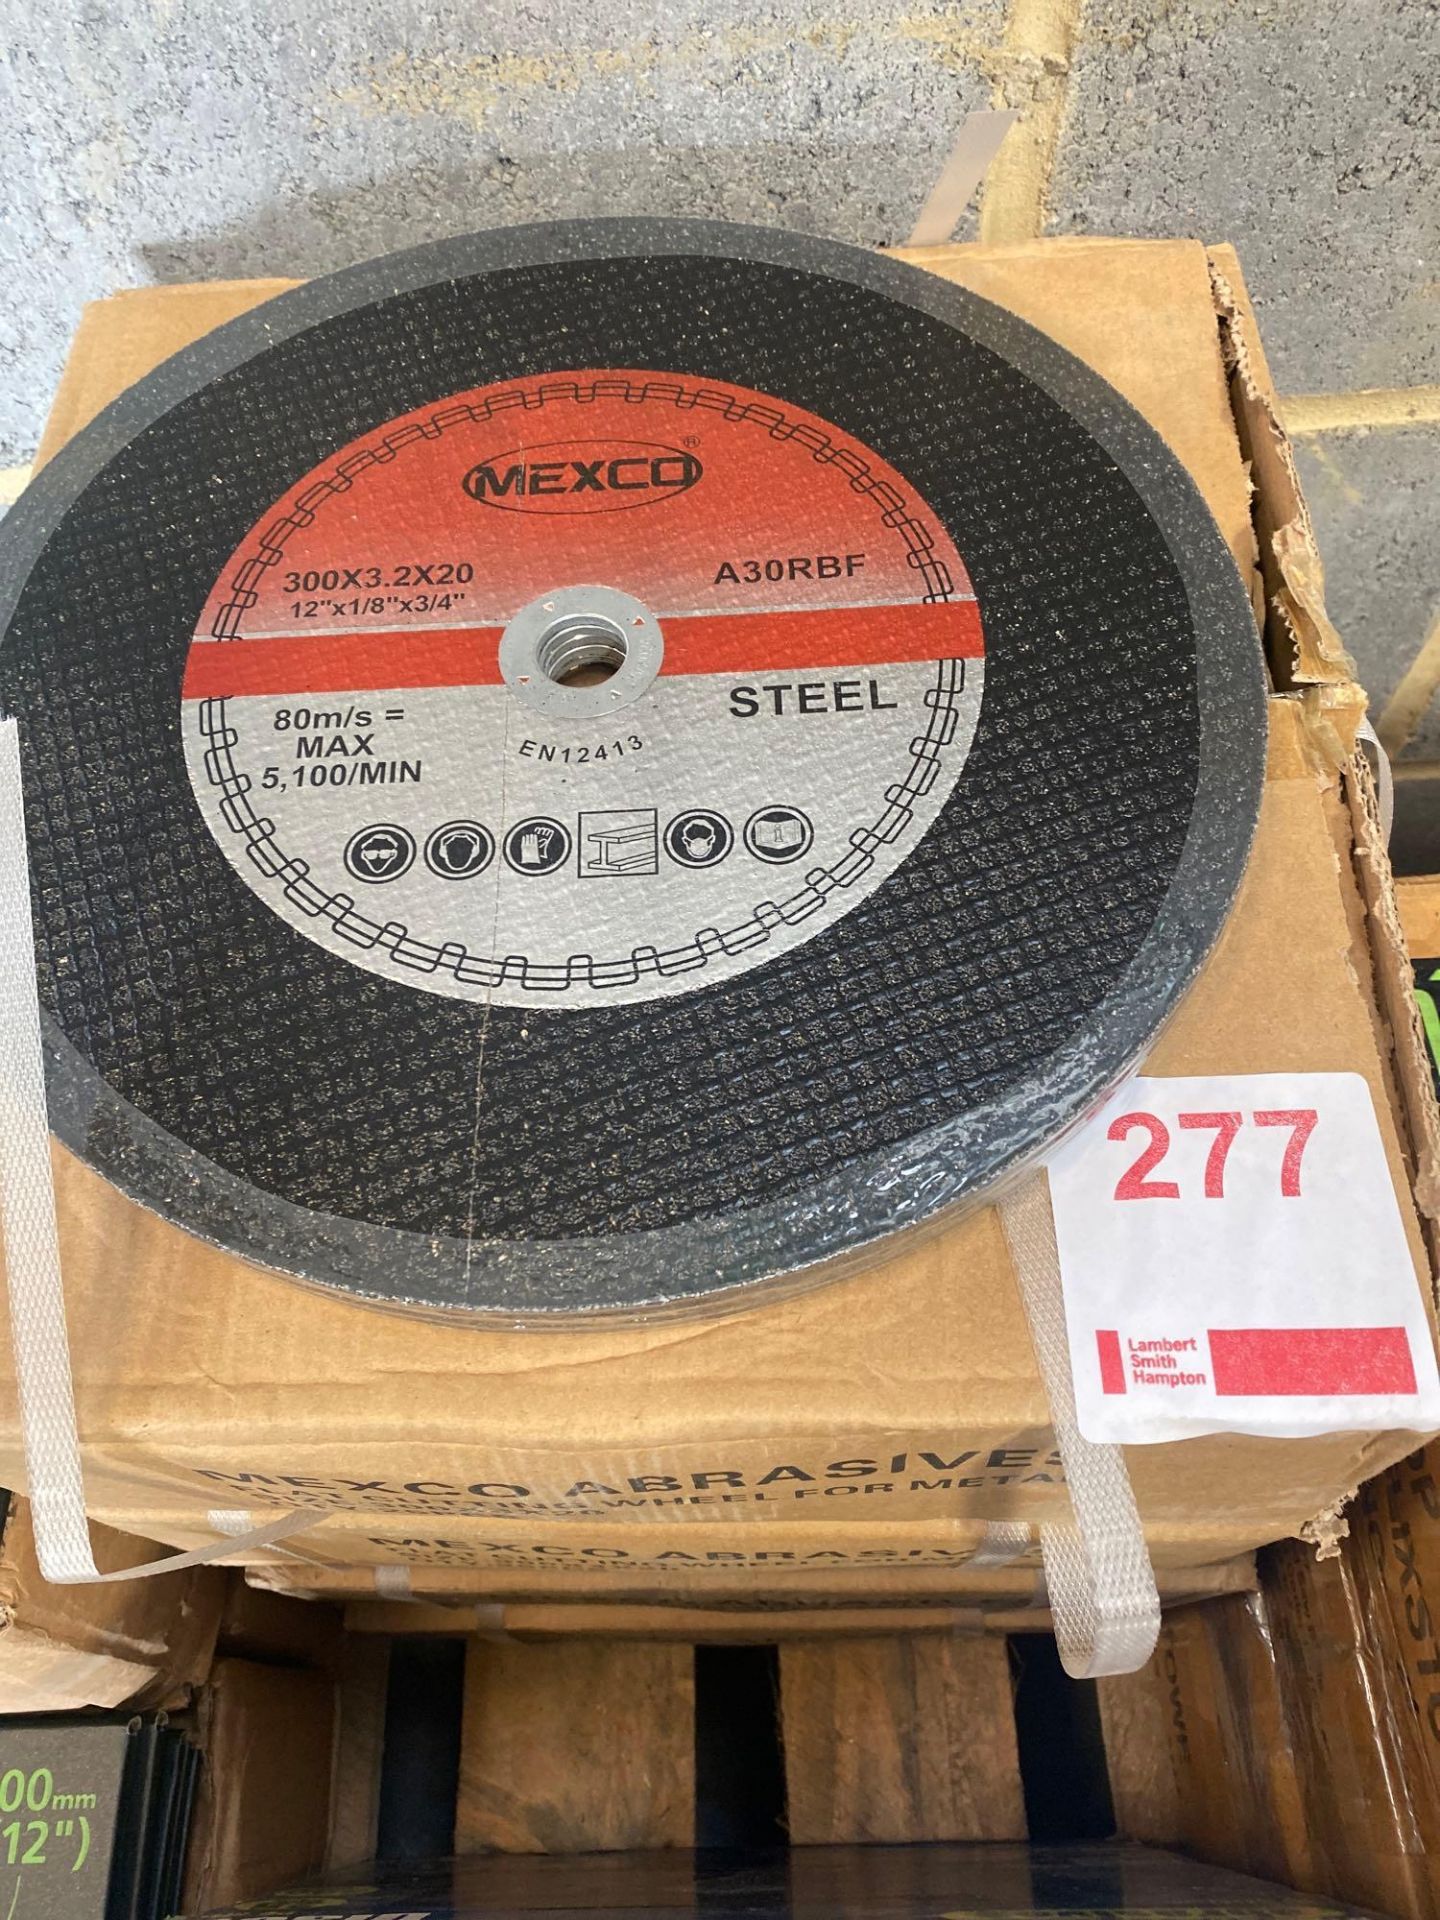 100 Mexico A30 RBF steel cutting discs, 300x3.2x20